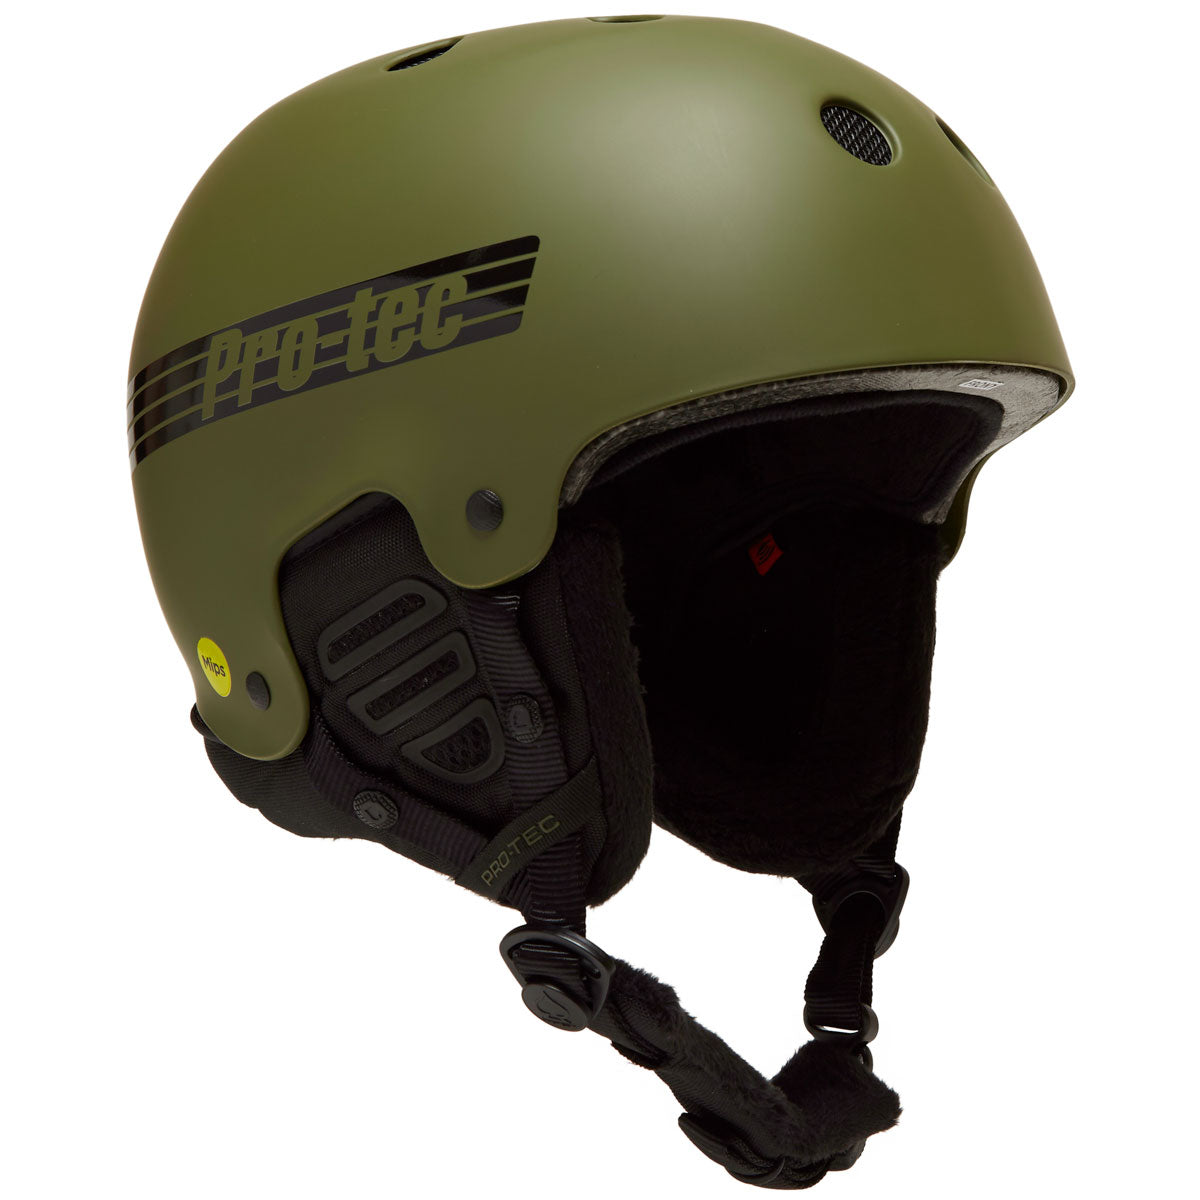 Pro Tec Old School With Mips Snowboard Helmet - Matte Olive image 3